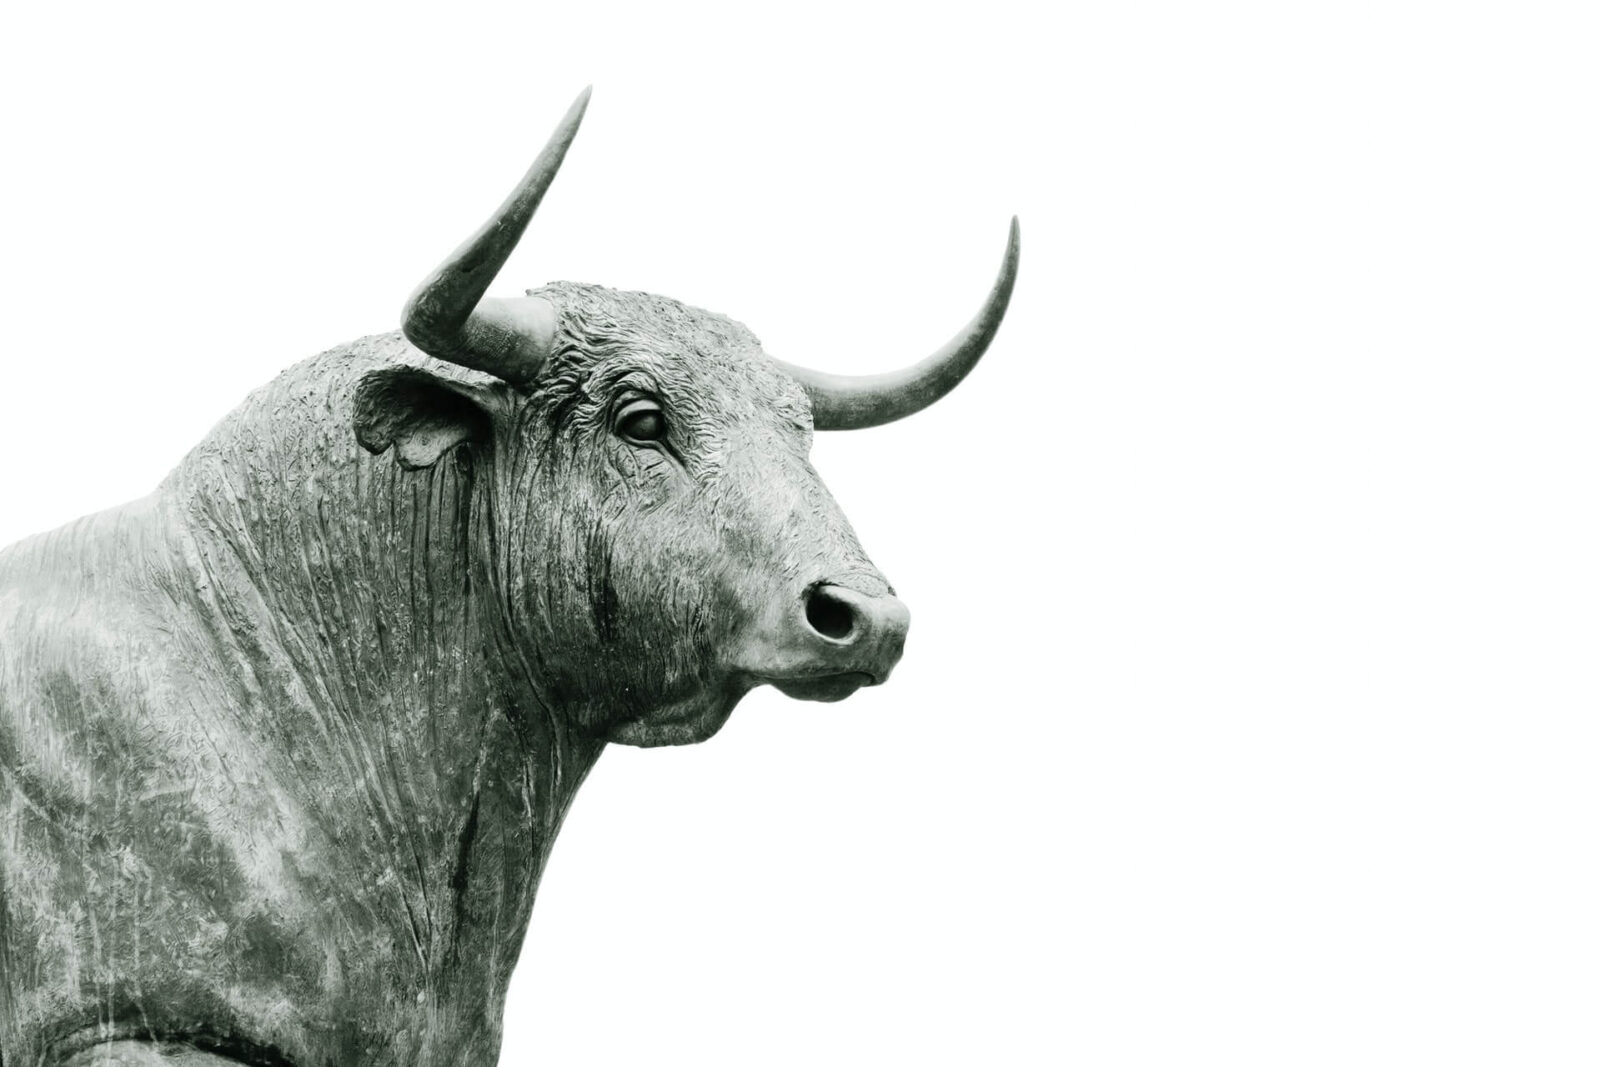 Bull run in the stock market